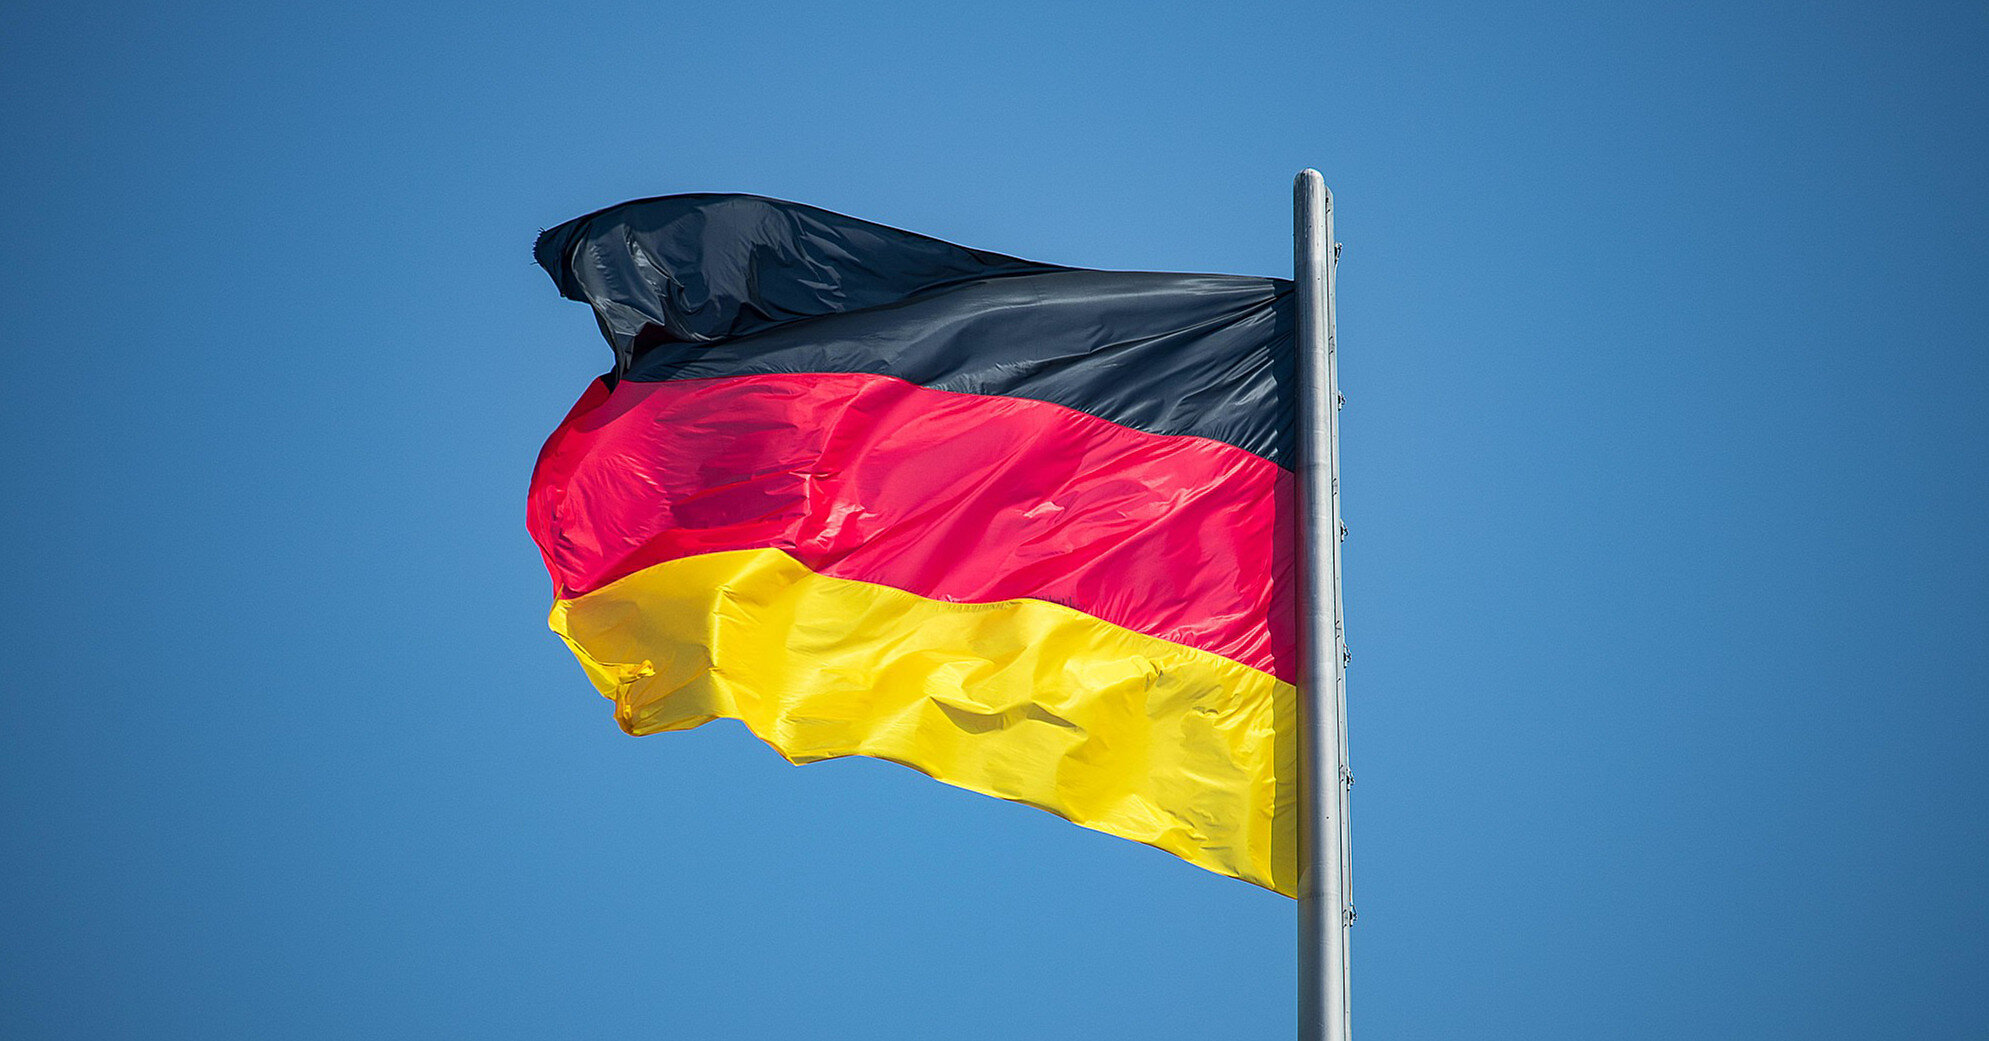 Німеччина схвалила експорт озброєння до України майже на 4 млрд євро